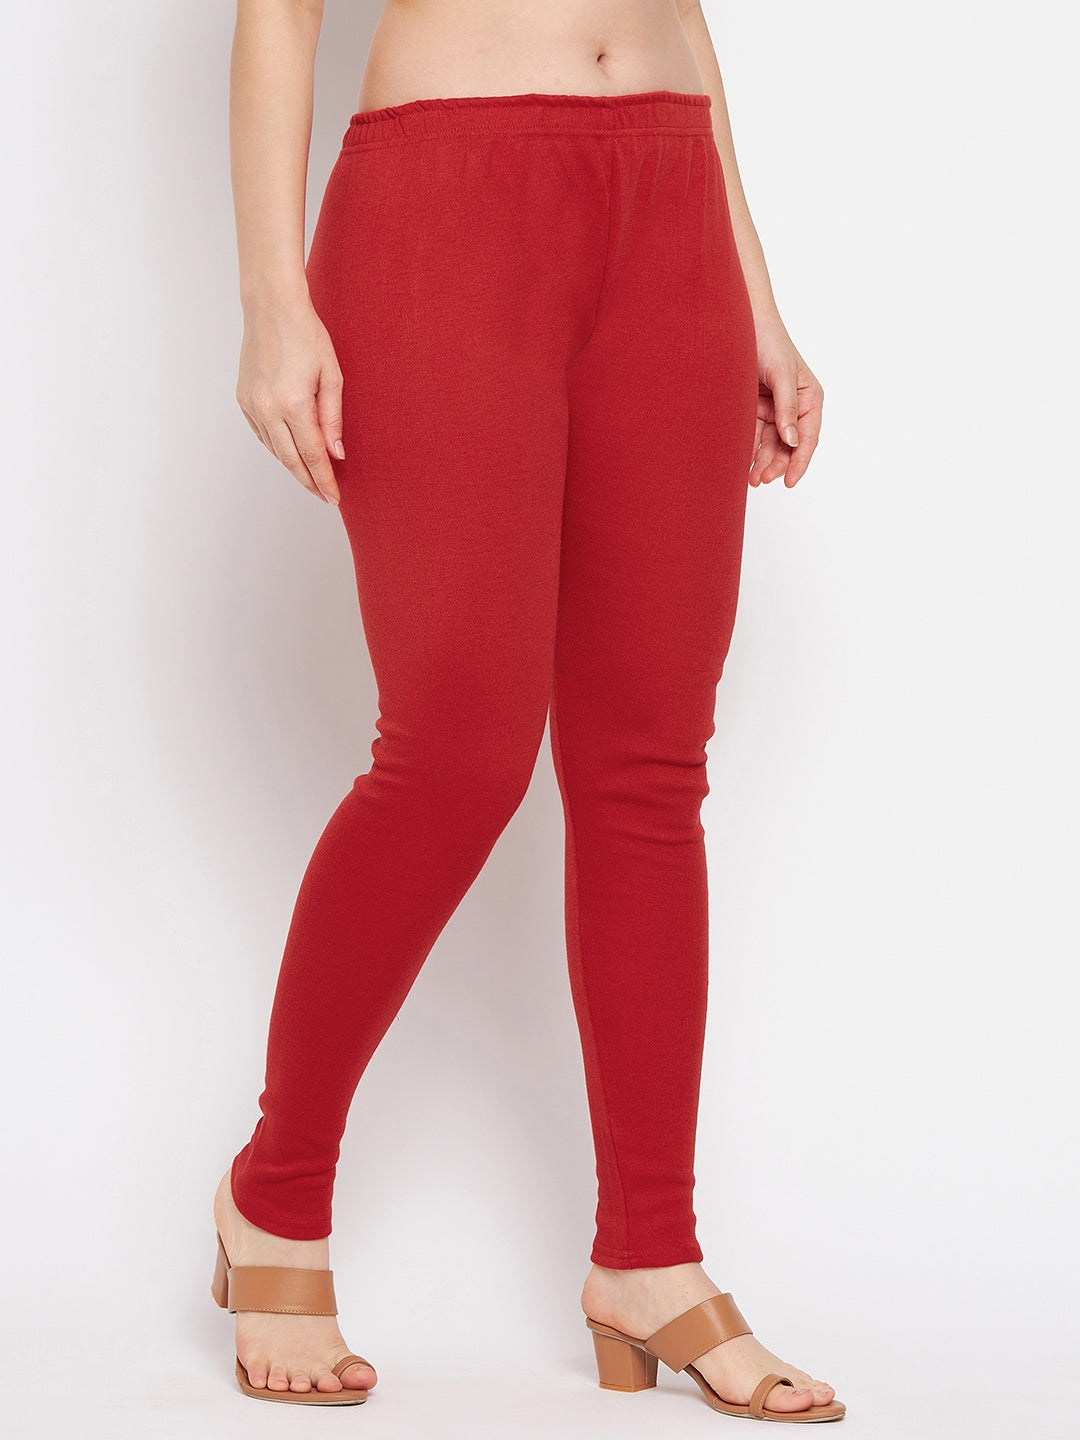 Clora Red Solid Woolen Leggings - Clora Creation